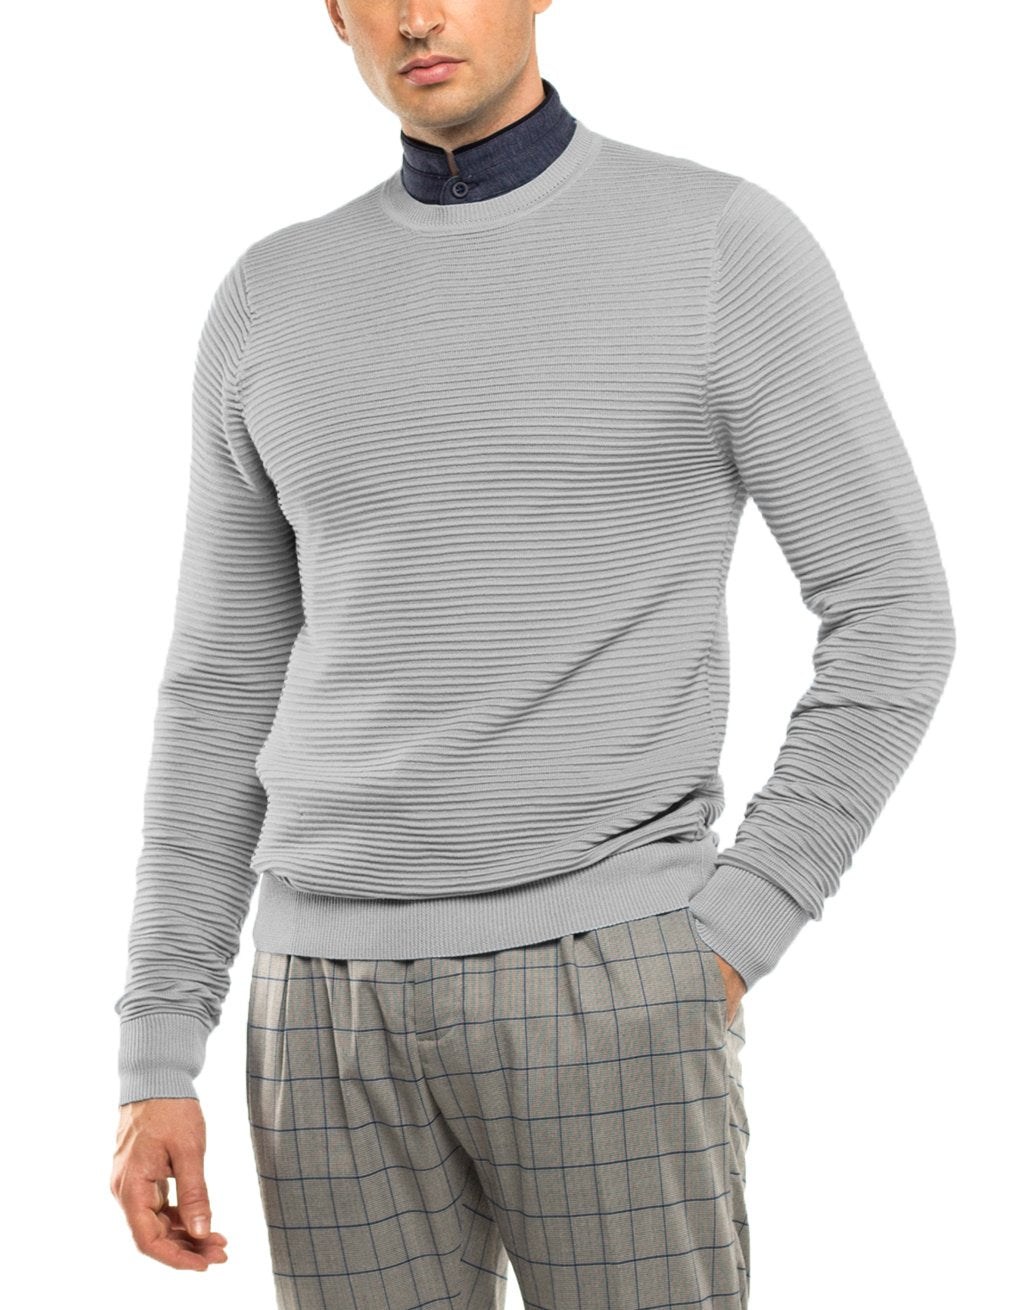 JUDE Long Sleeve Crew Neck Sweater